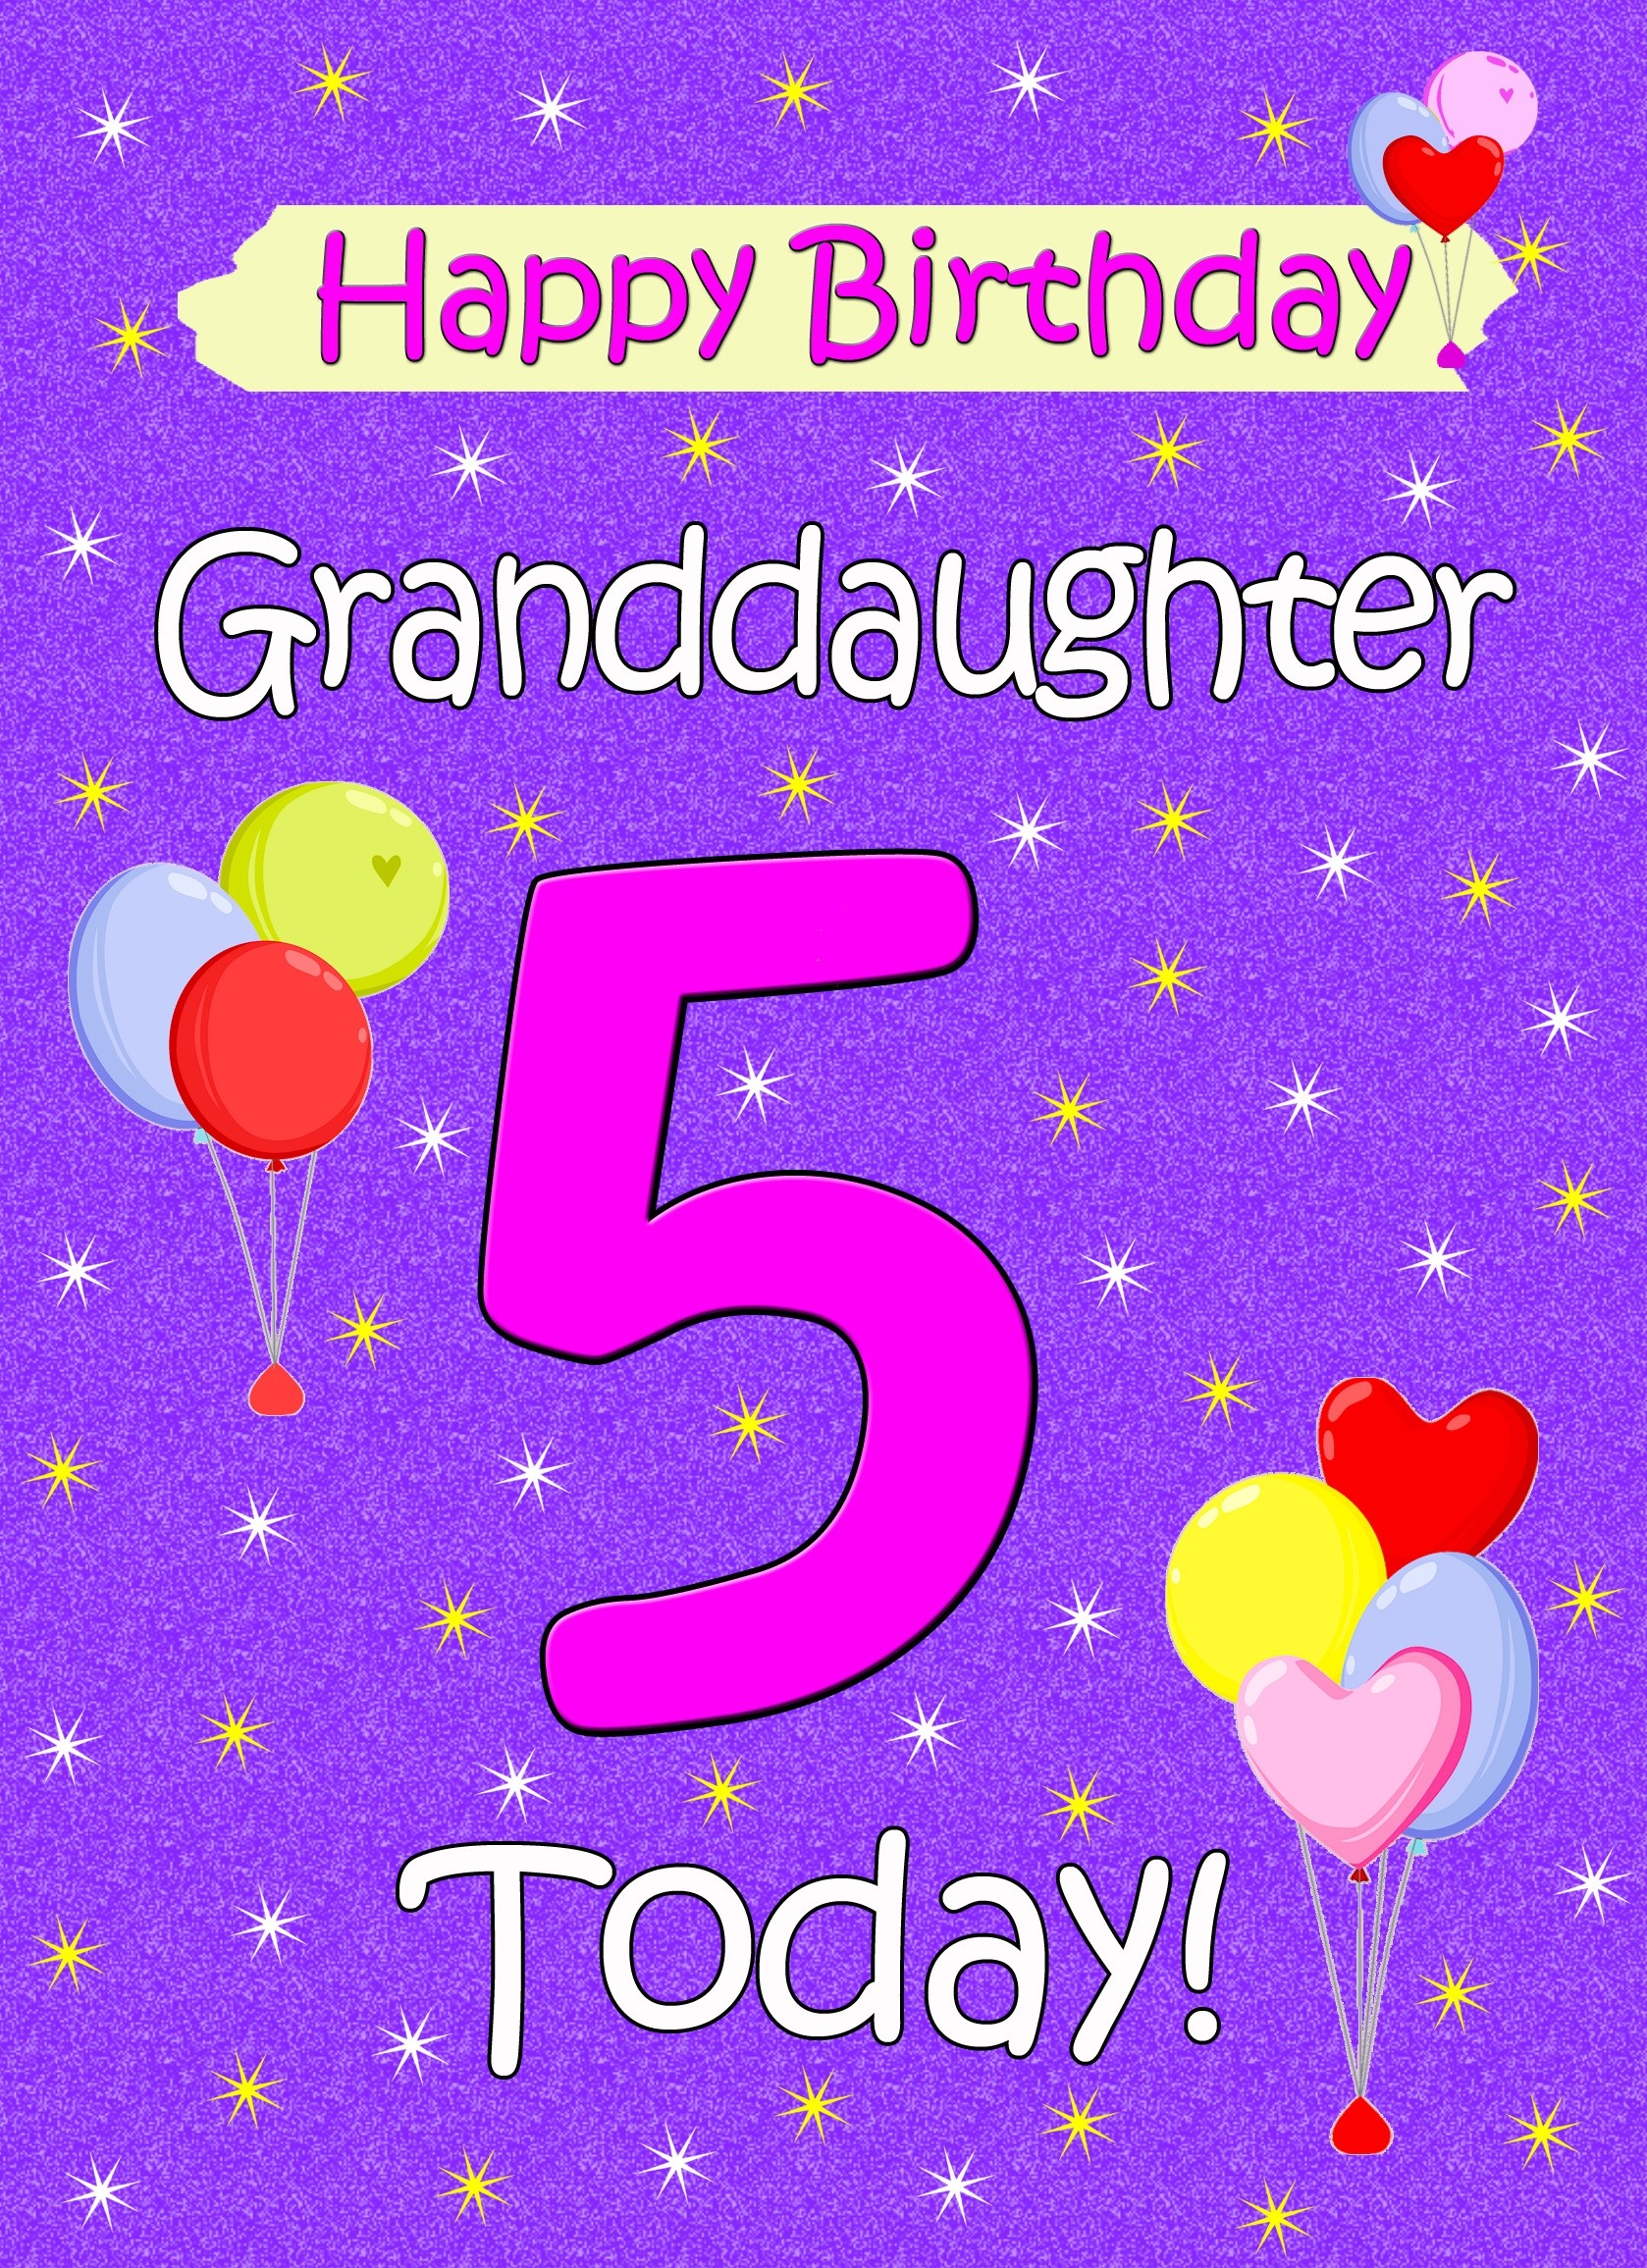 Granddaughter 5th Birthday Card (Lilac)